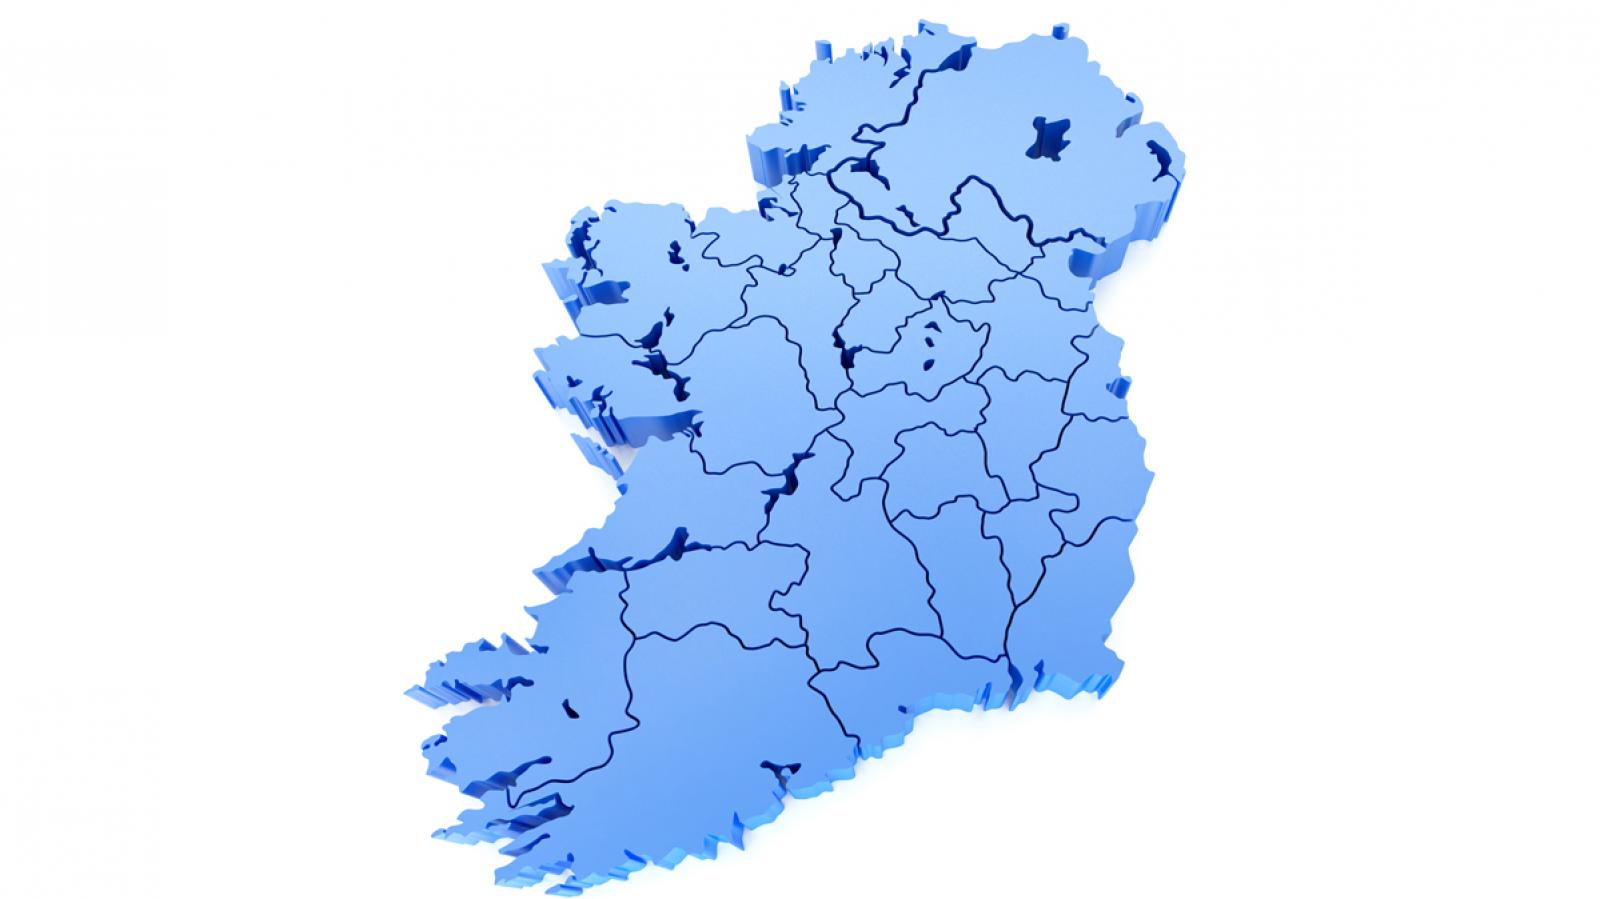 Map of Ireland - smaller